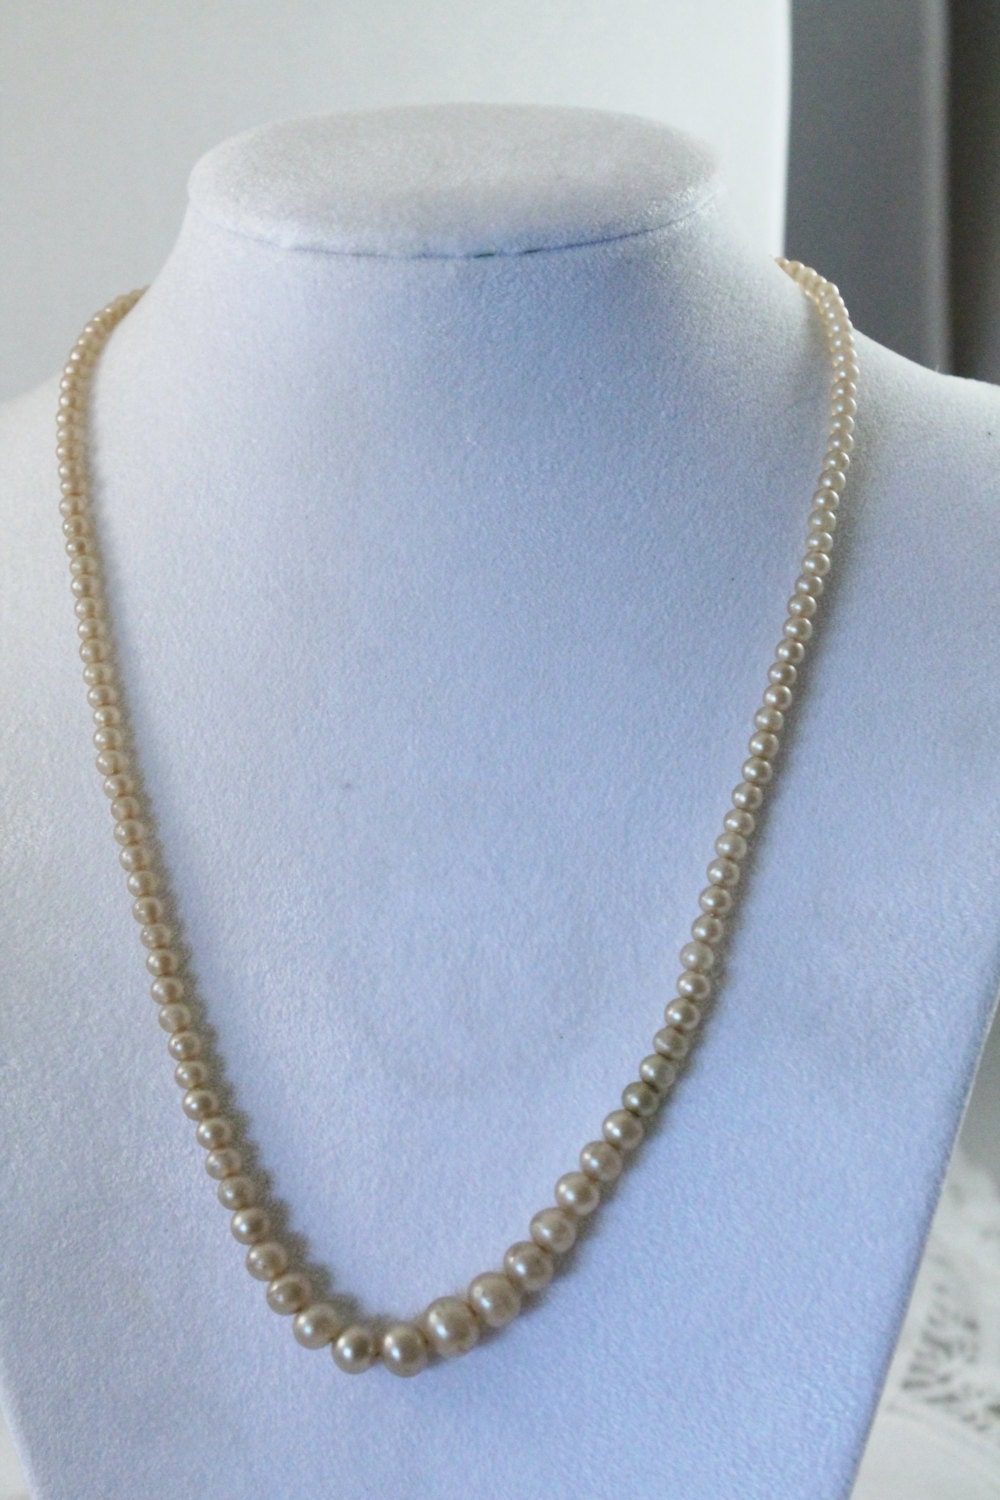 Older Vintage Faux Pearl Necklace - Etsy